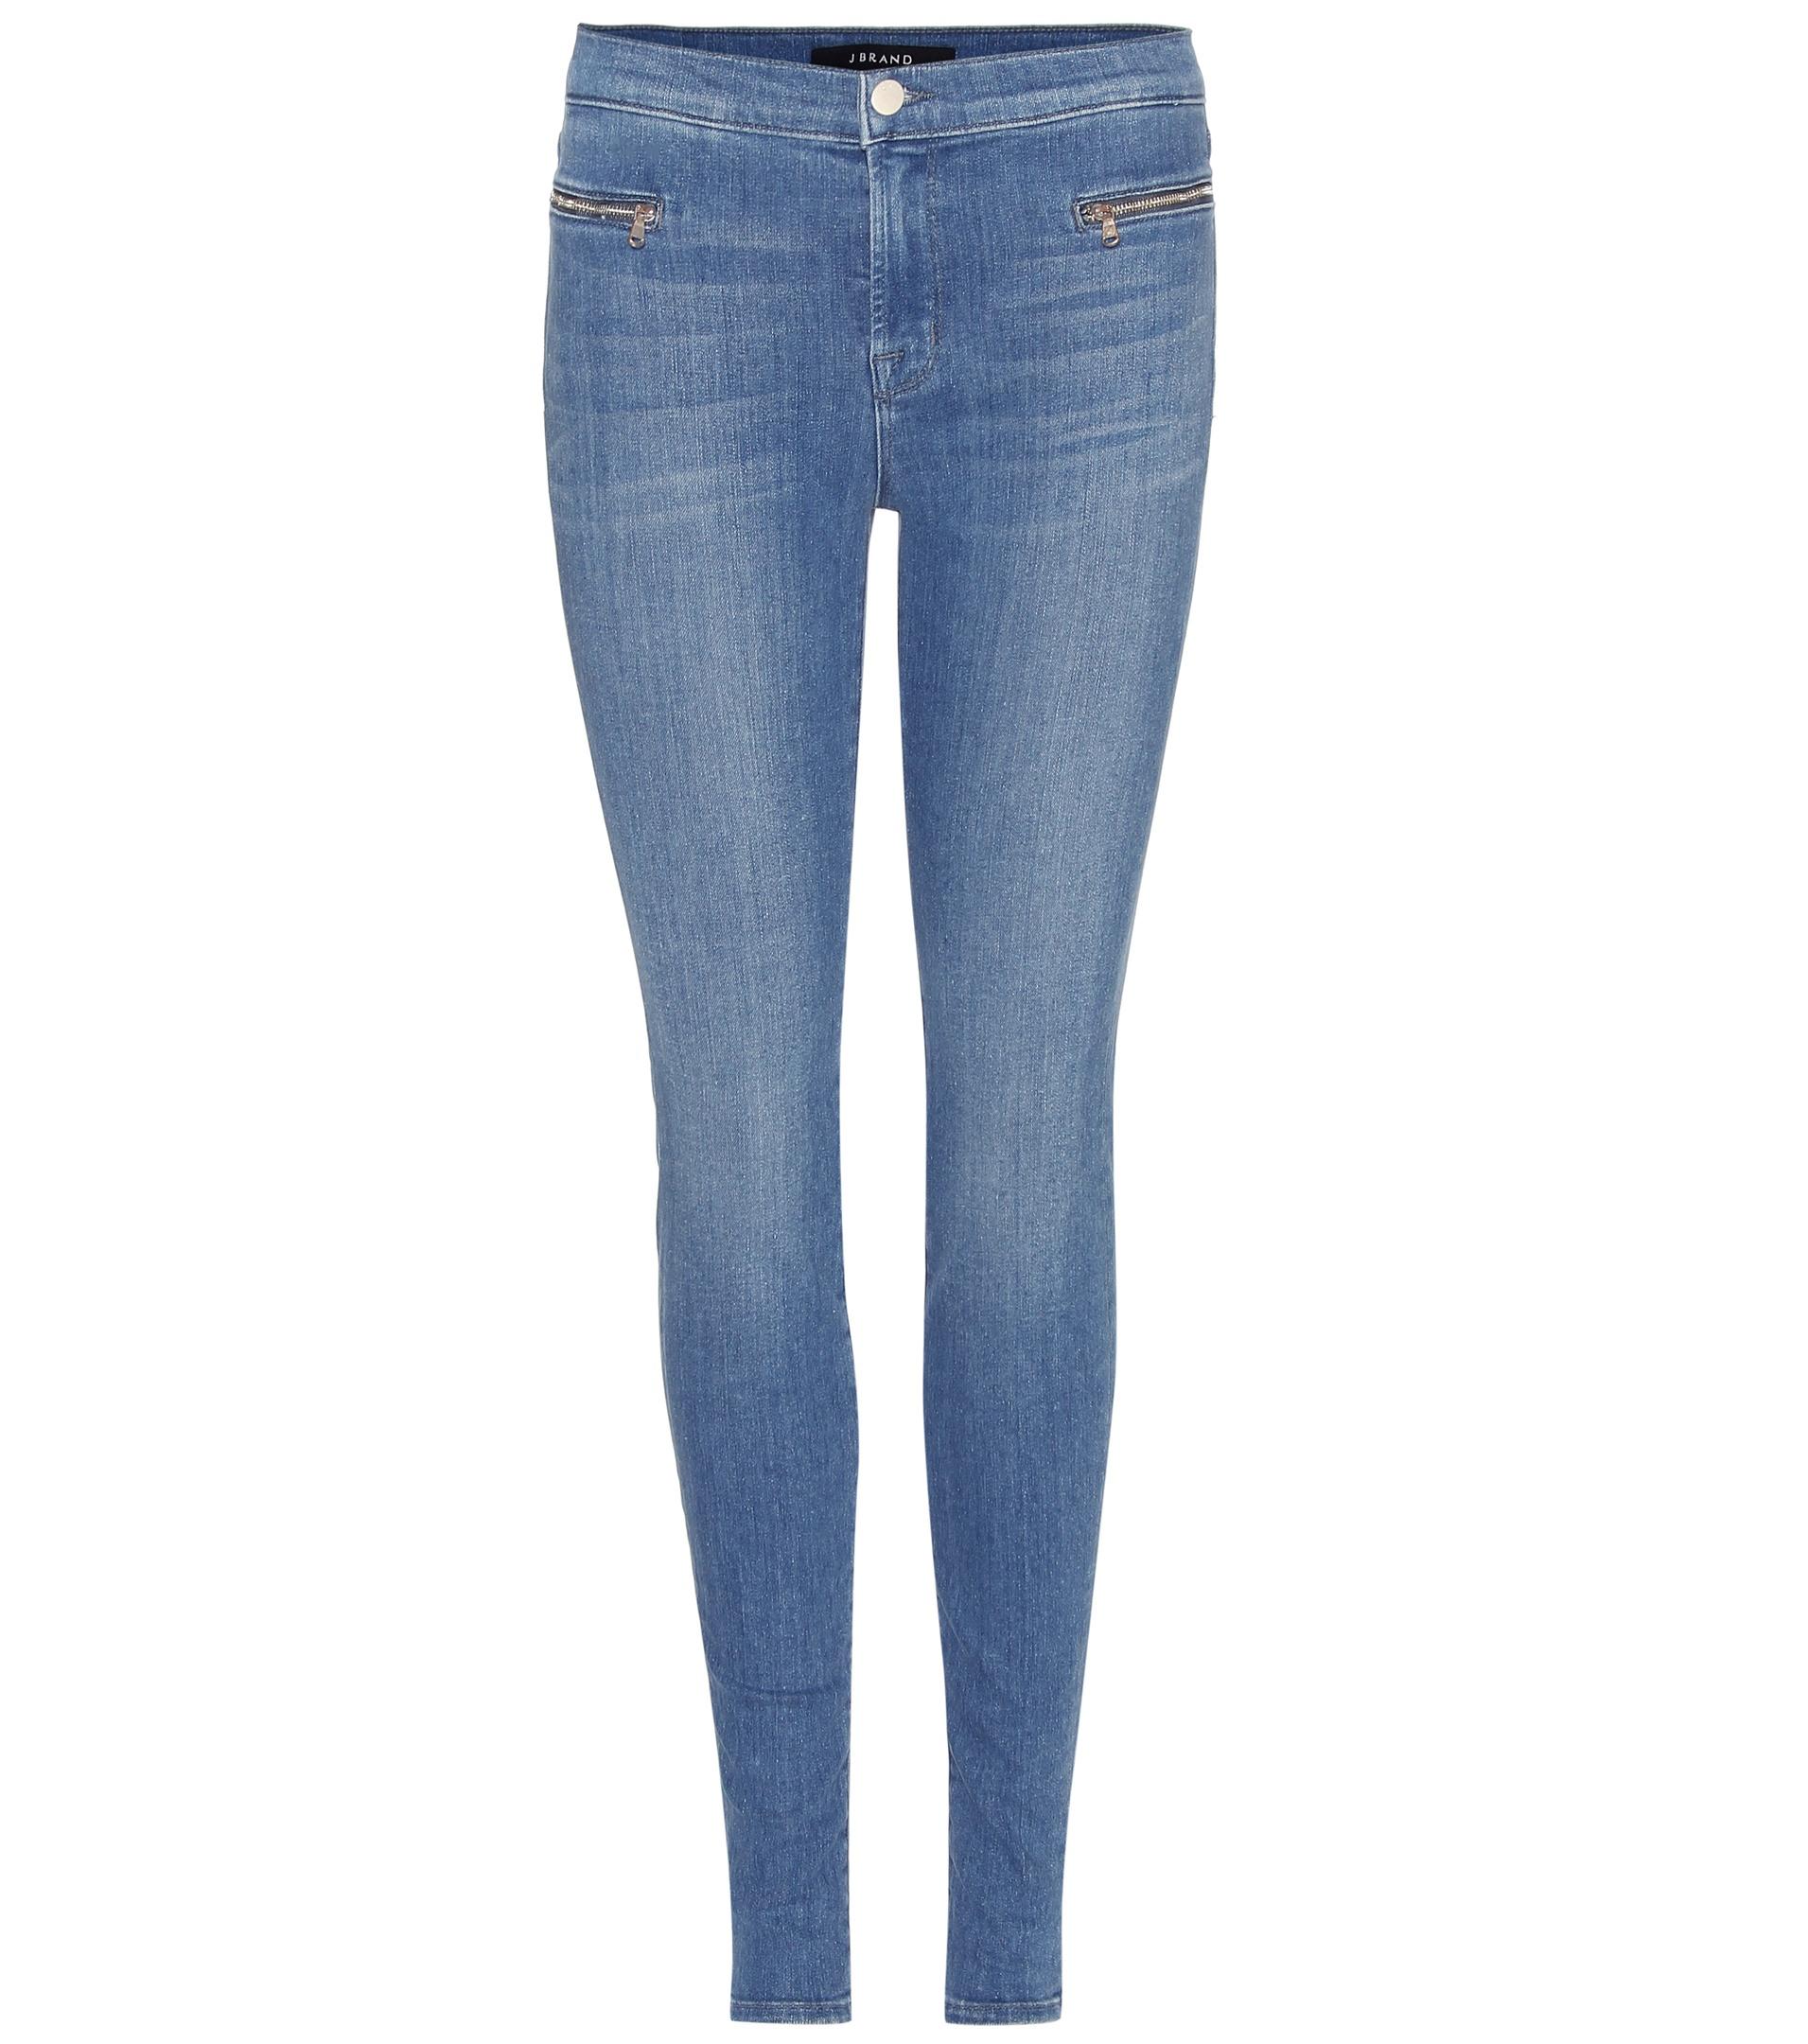 Lyst - J brand Emma Mid Rise Super Skinny Jeans in Blue